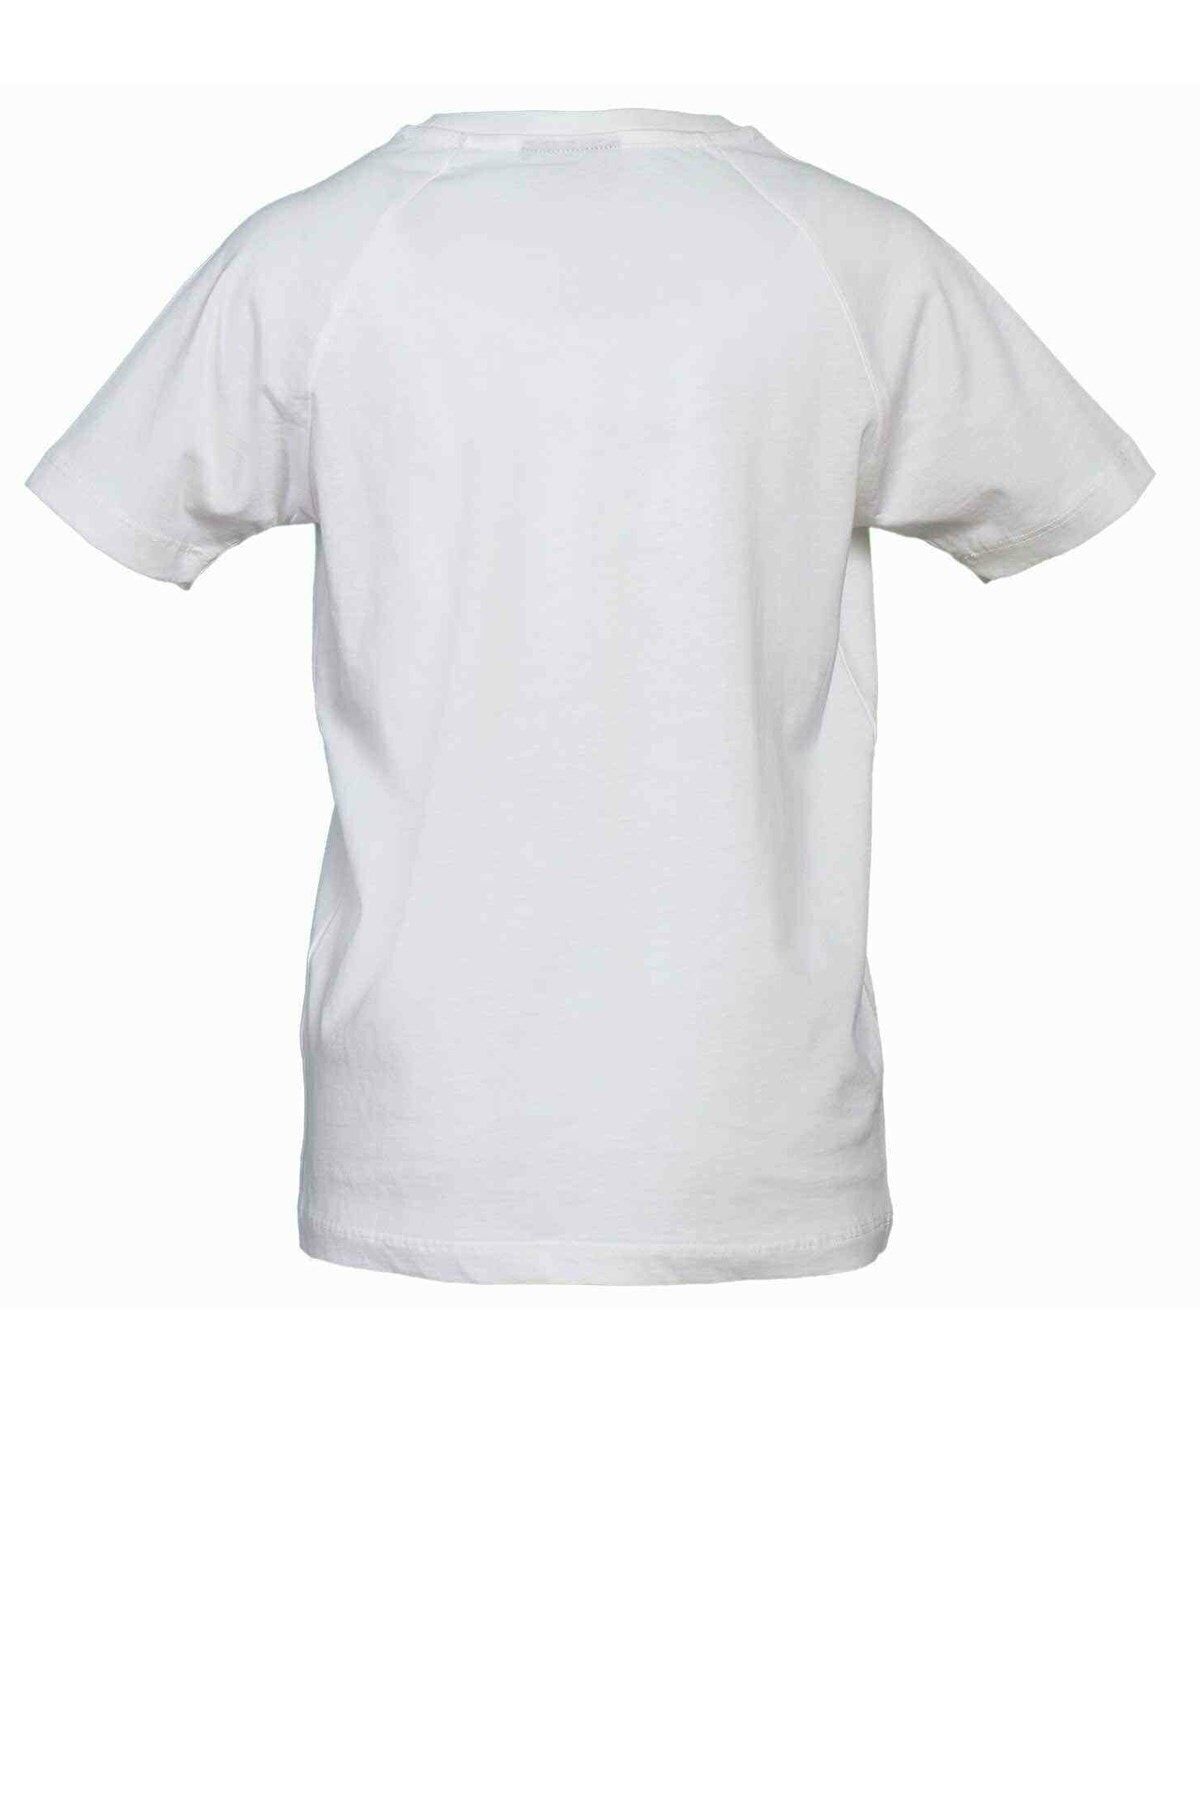 hummel تی شرت کودکان Durango 911307-9003